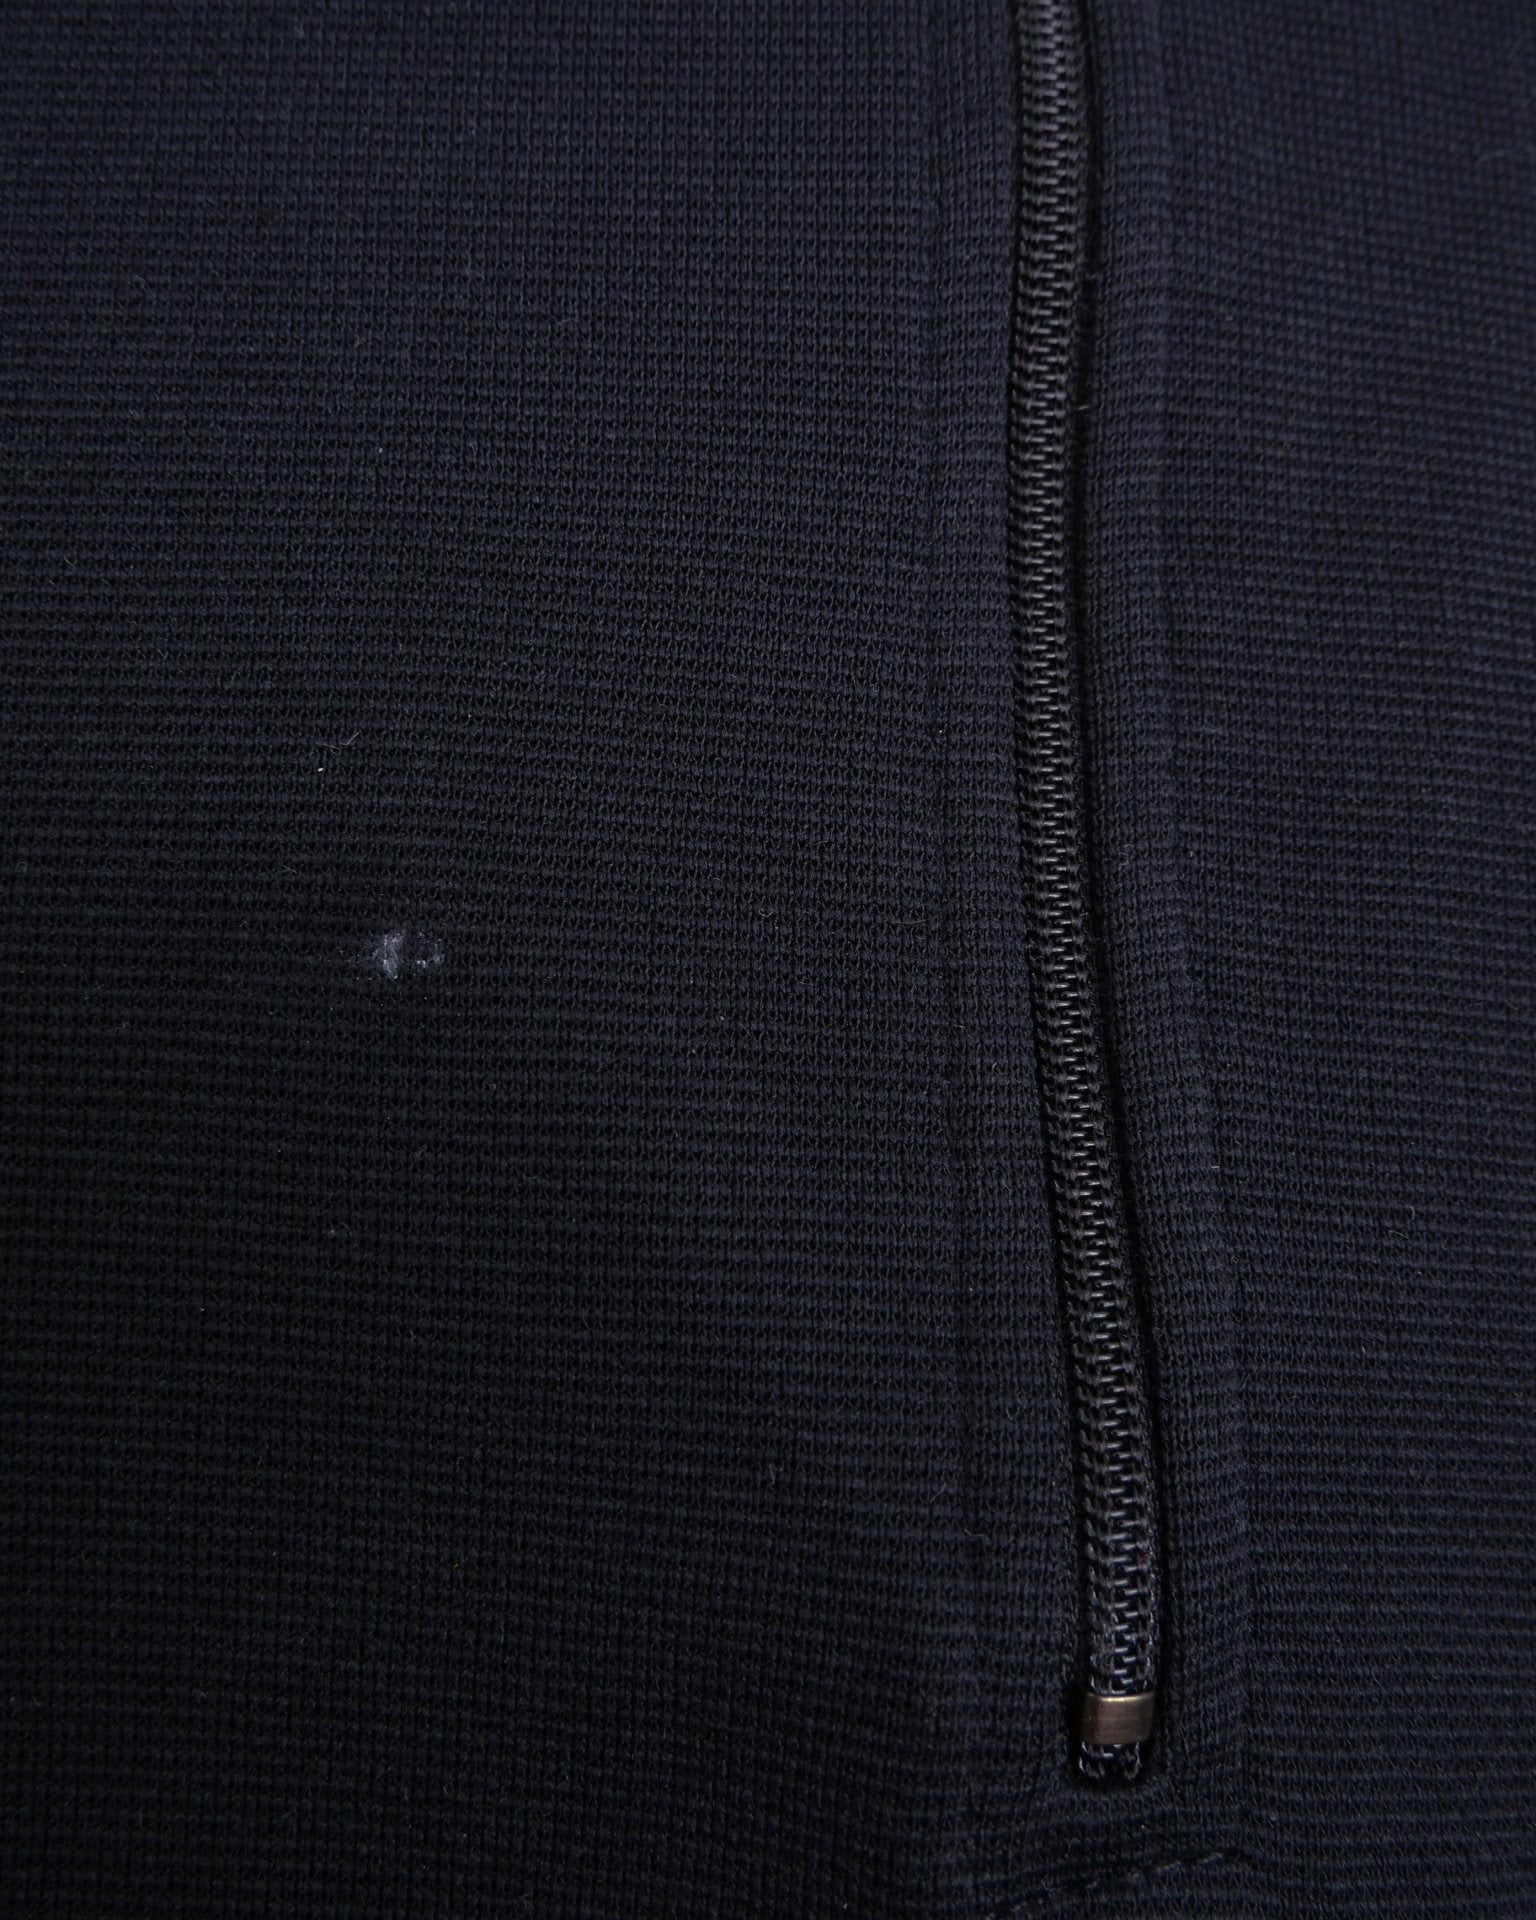 nike printed Swoosh black Half Zip Sweater - Peeces